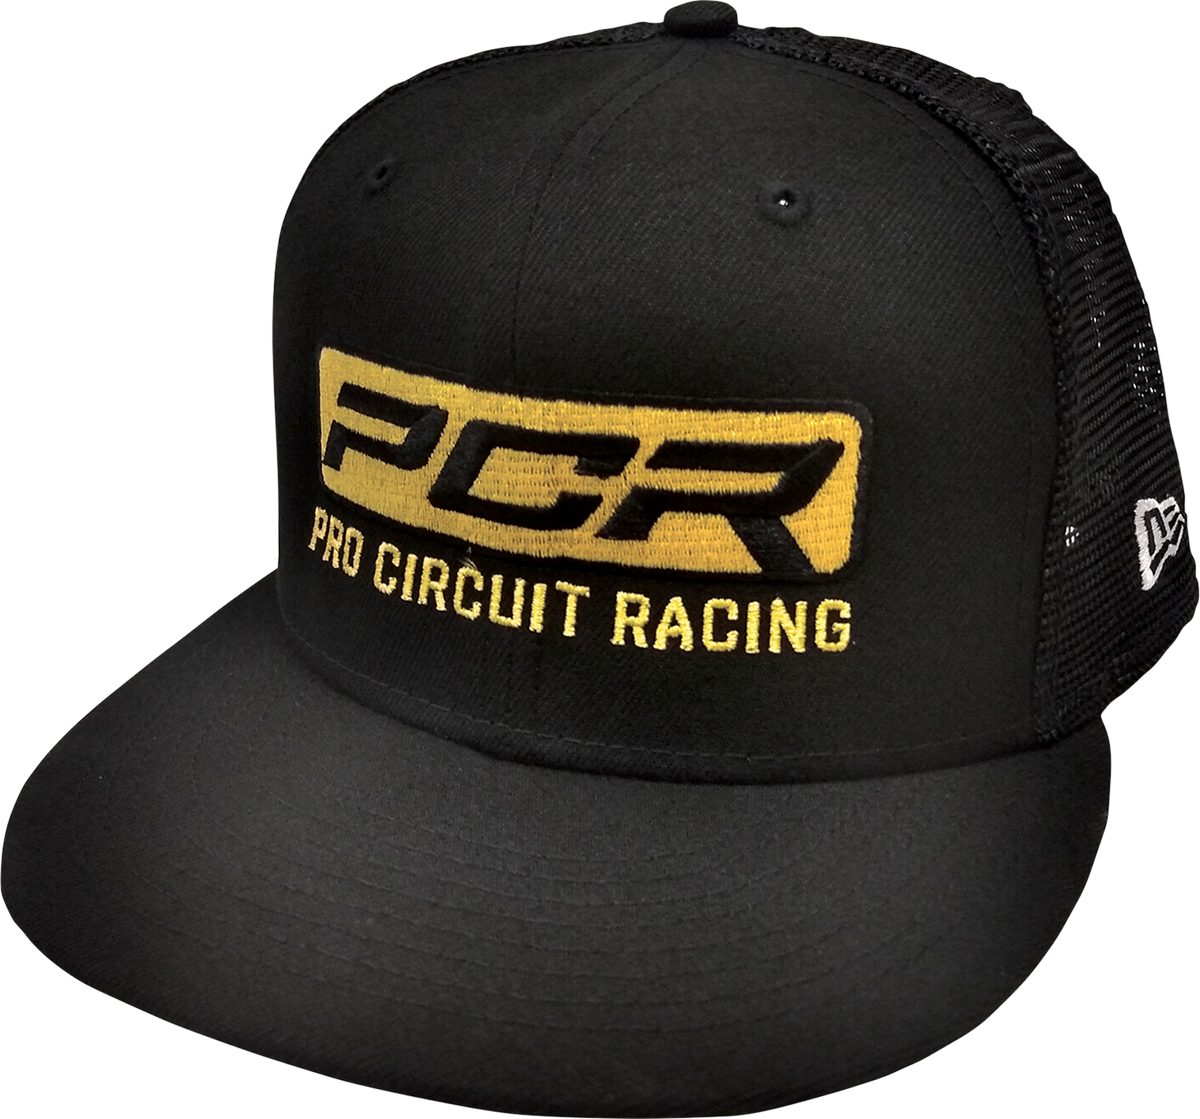 Hats Pro Circuit Racing, Black